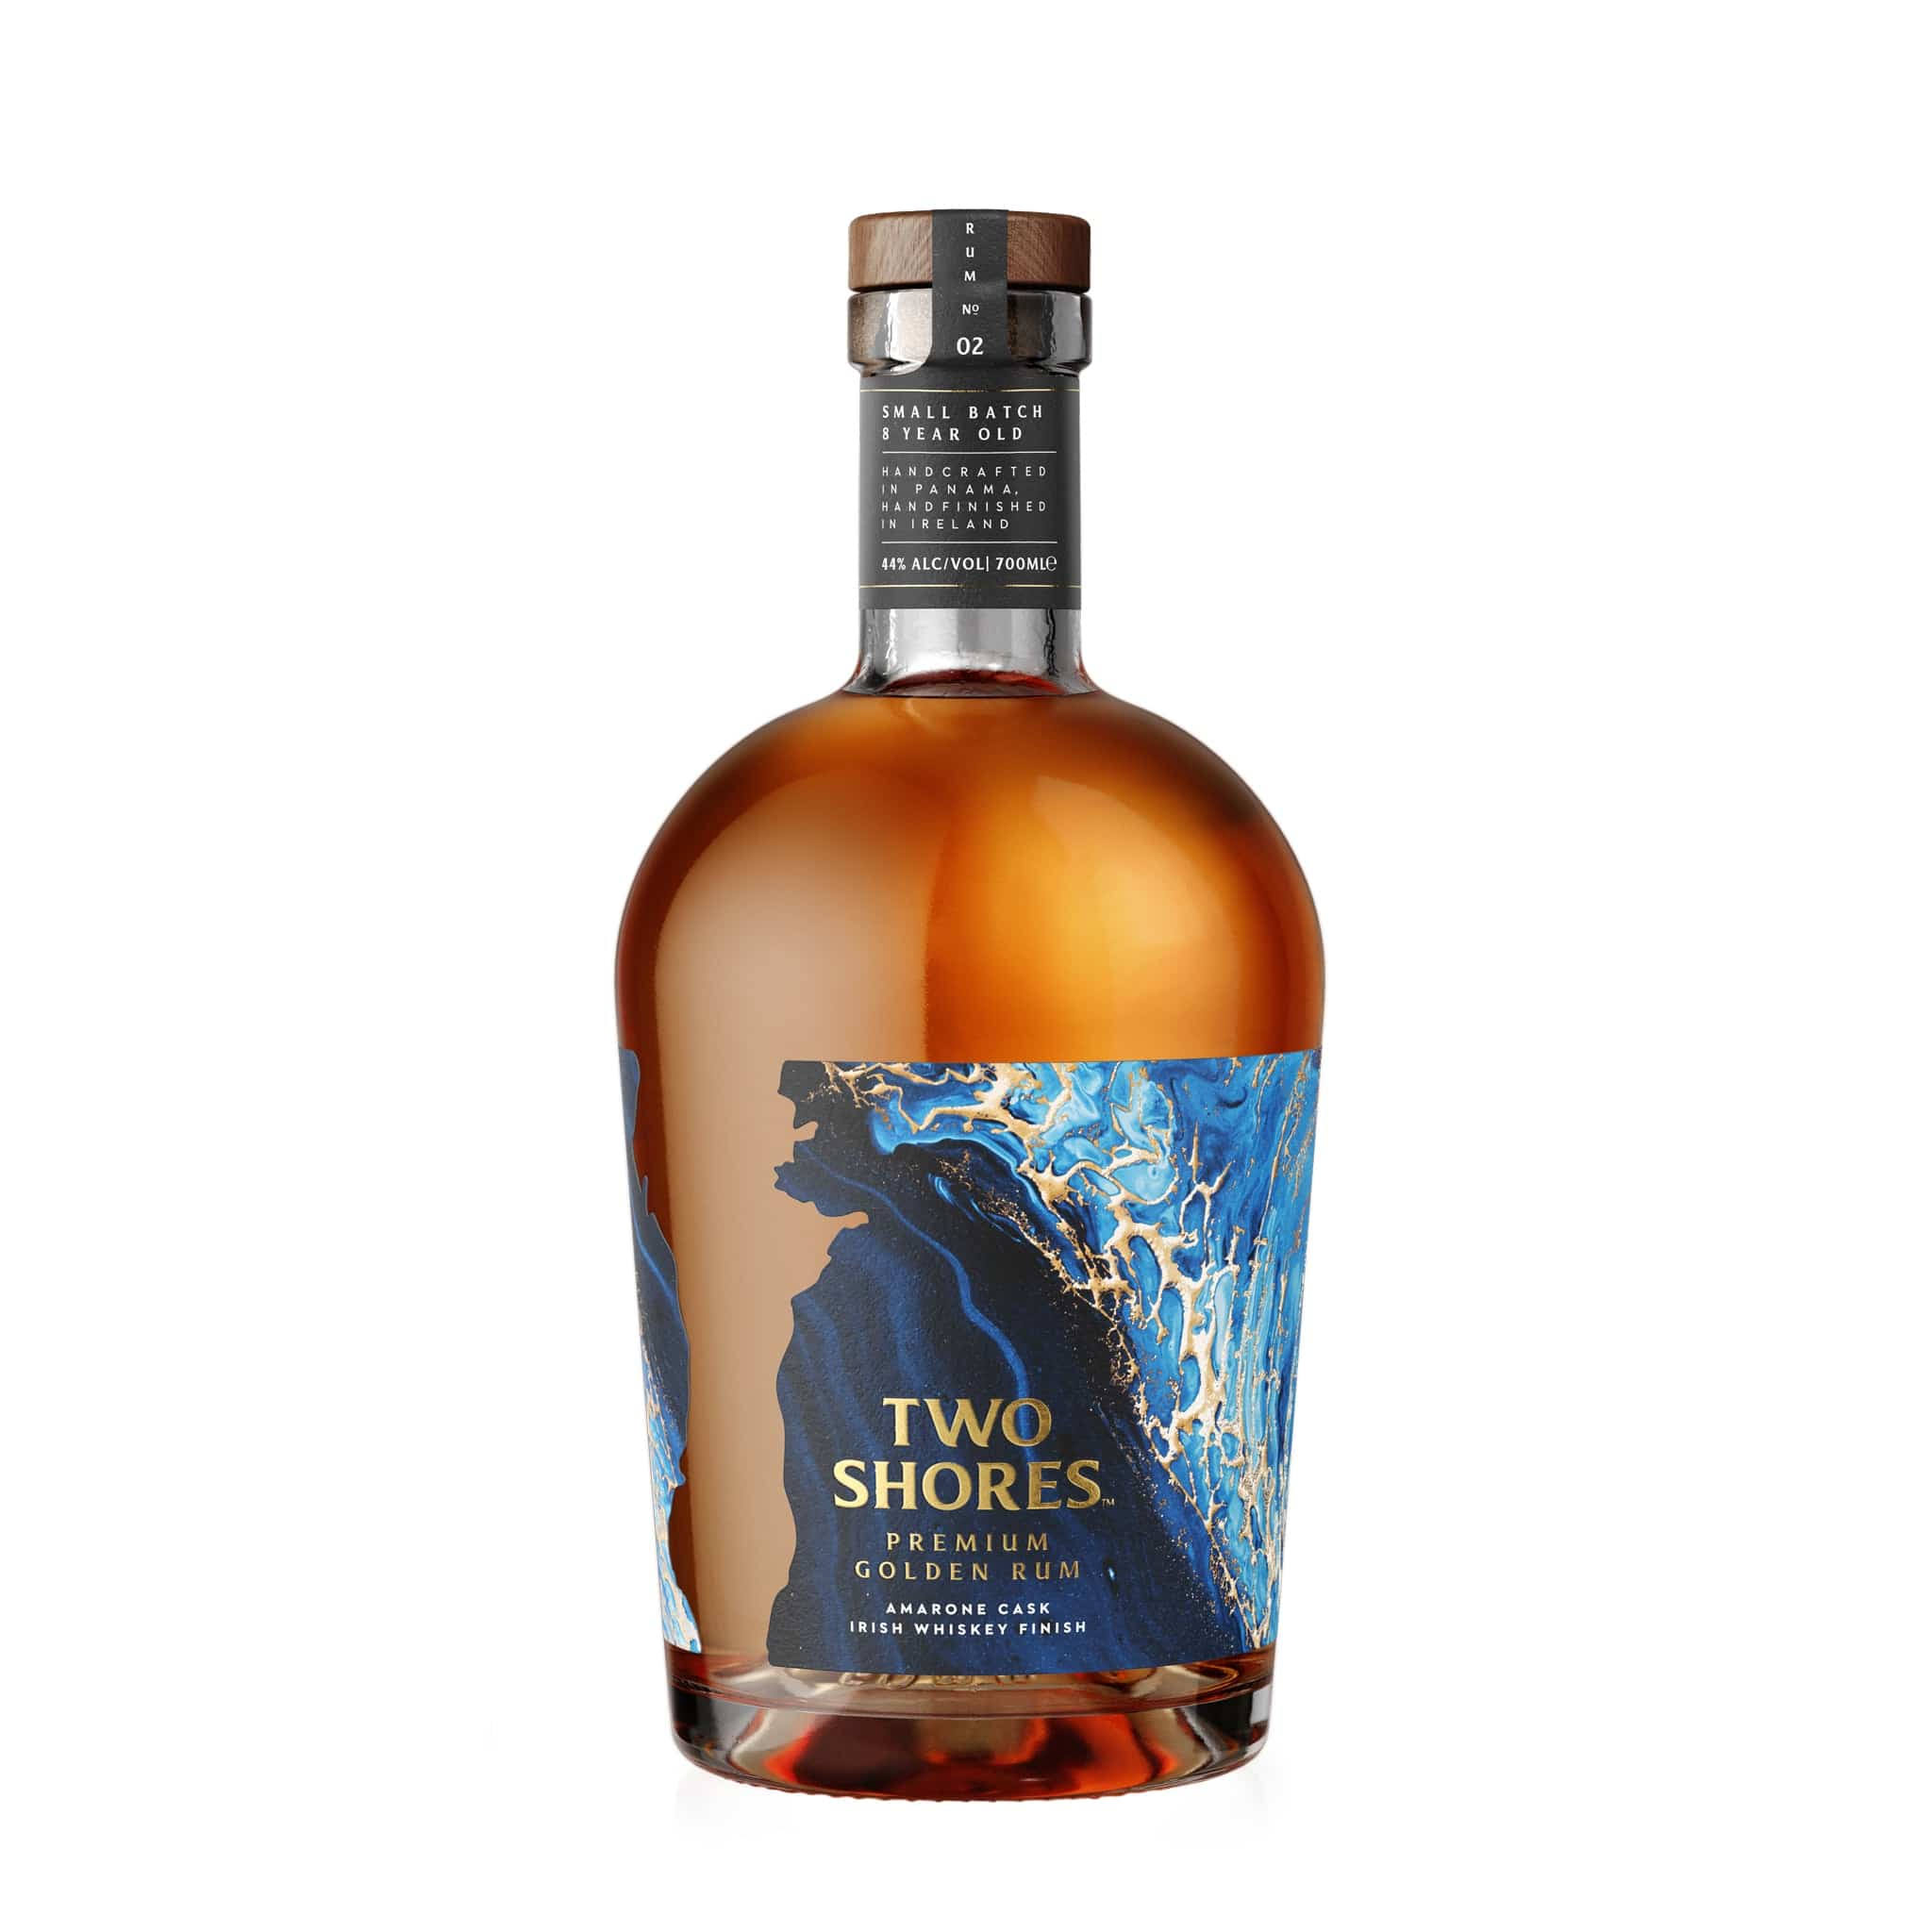 Two Shores Rum - Amarone Cask (Irish Whiskey Finish) Dark Rum 70cl | Master of Malt